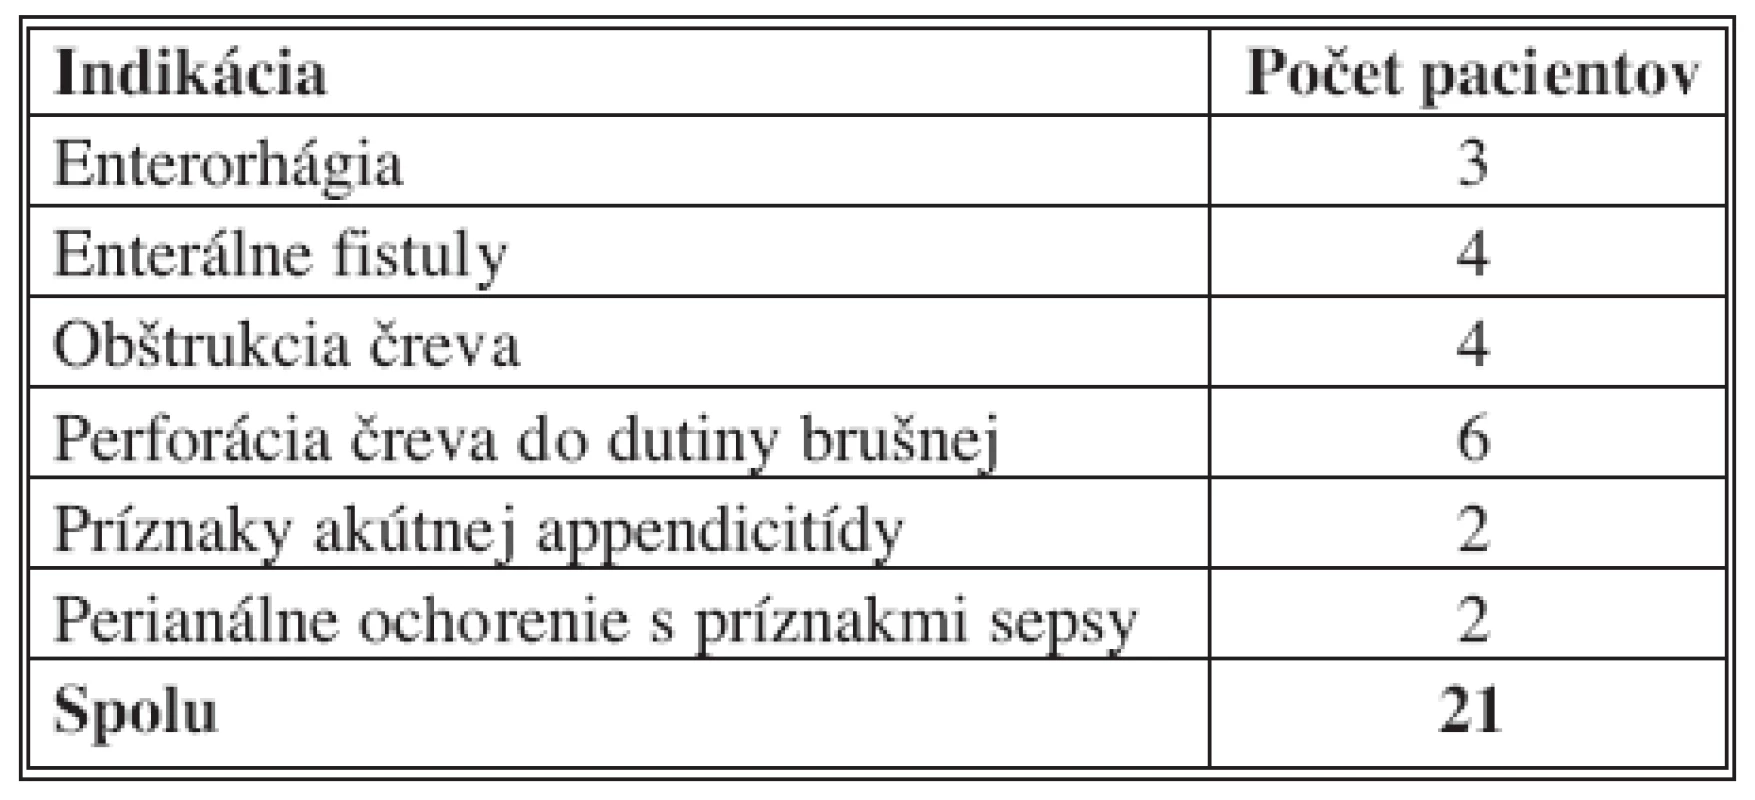 Indikácie na prijatie – IV. chirurgická klinika LF UKo a FNsP Bratislava, 2006–2007
Tab. 2. Indications for hospitalization – IV&lt;sup&gt;th&lt;/sup&gt; Surgical Clinic of the Bratislava Comenius University Medical Faculty and Faculty Hospital, 2006–2007